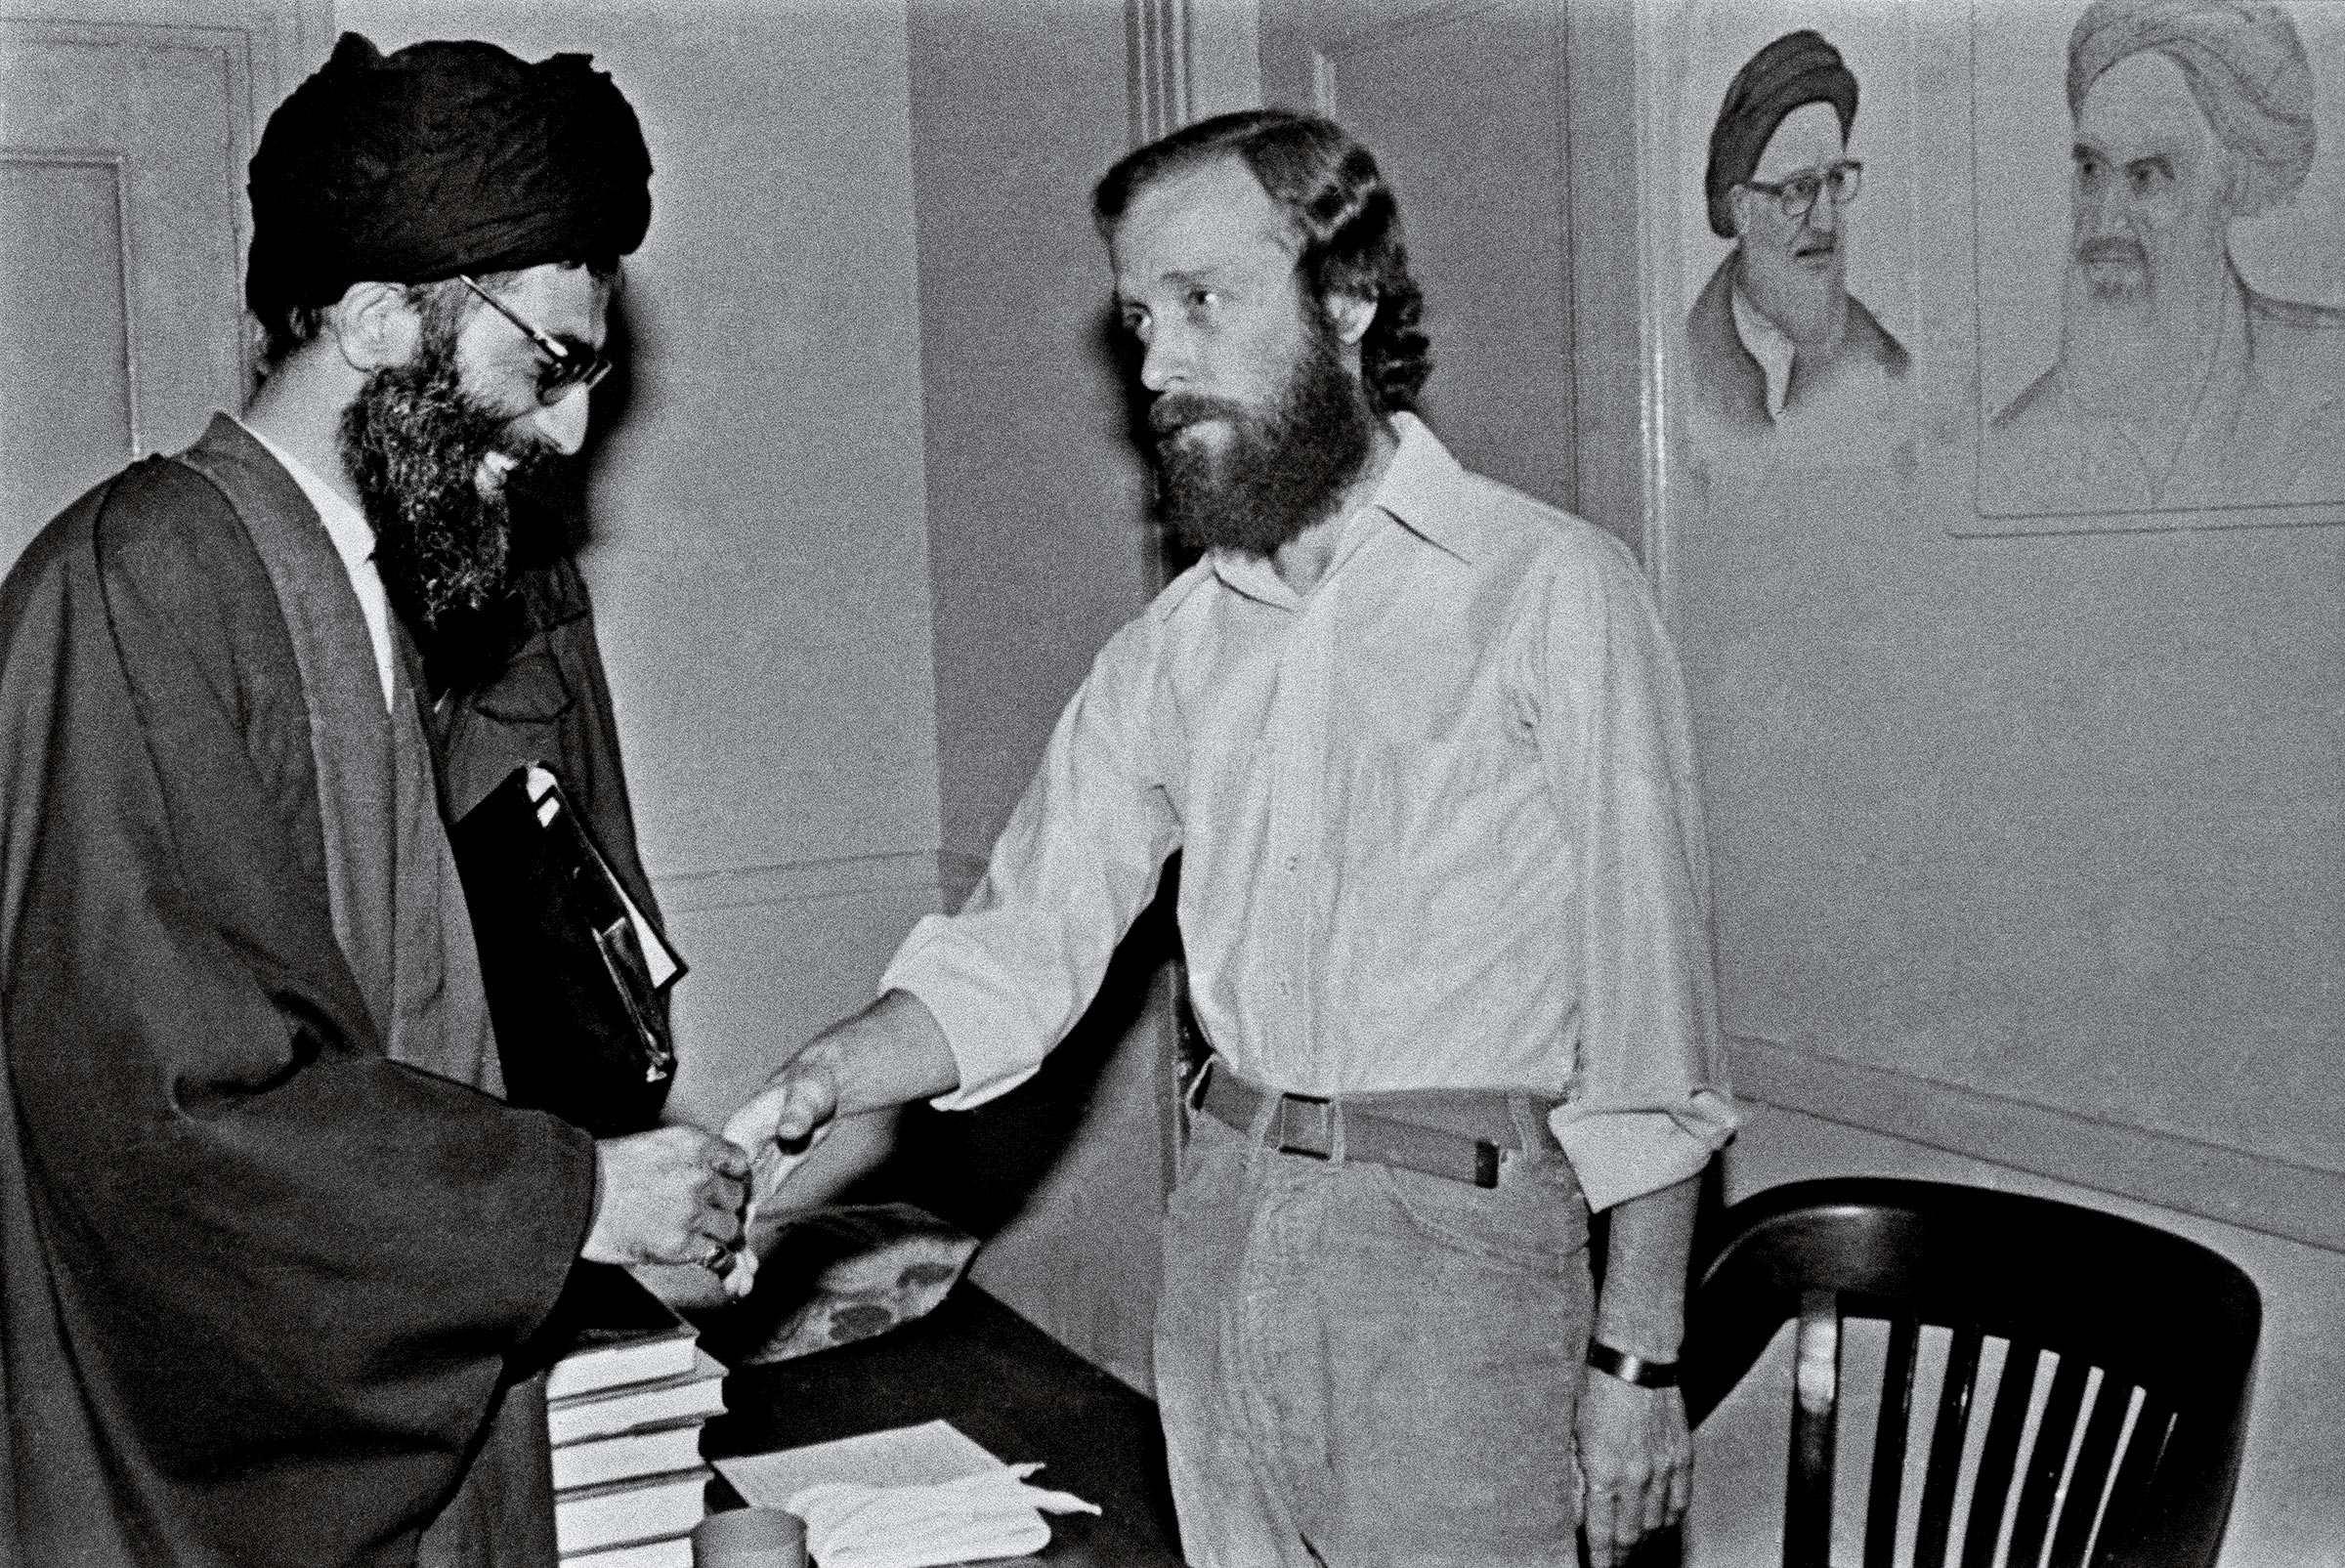 In 1980, Khamenei visited American hostages inside the captured U.S. embassy